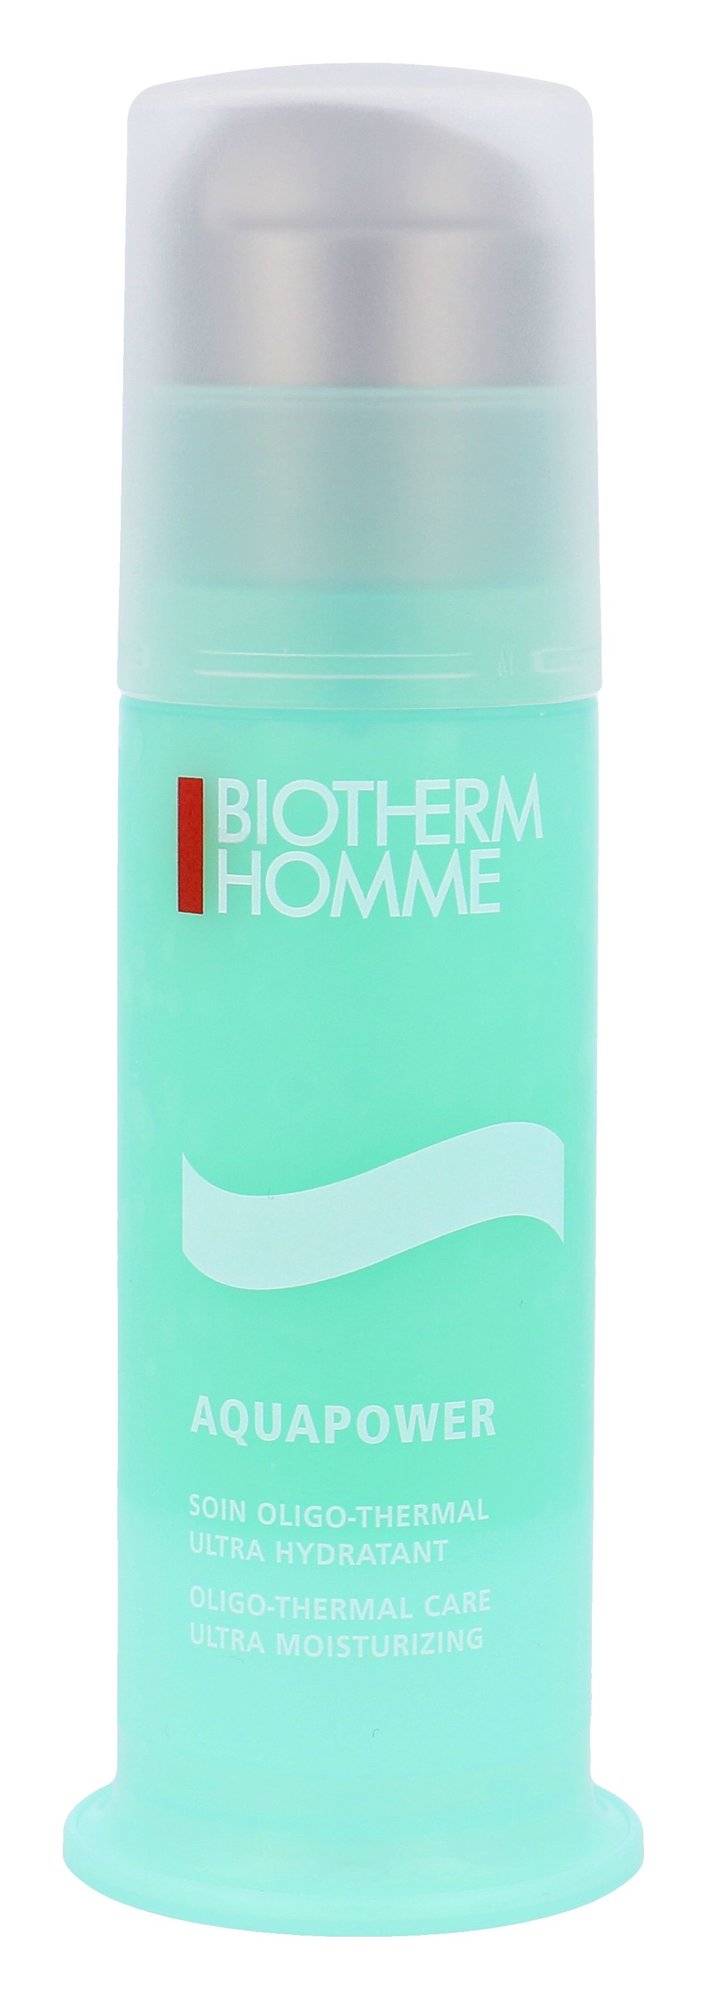 Biotherm Homme Aquapower Oligo Thermal Care 75ml veido gelis